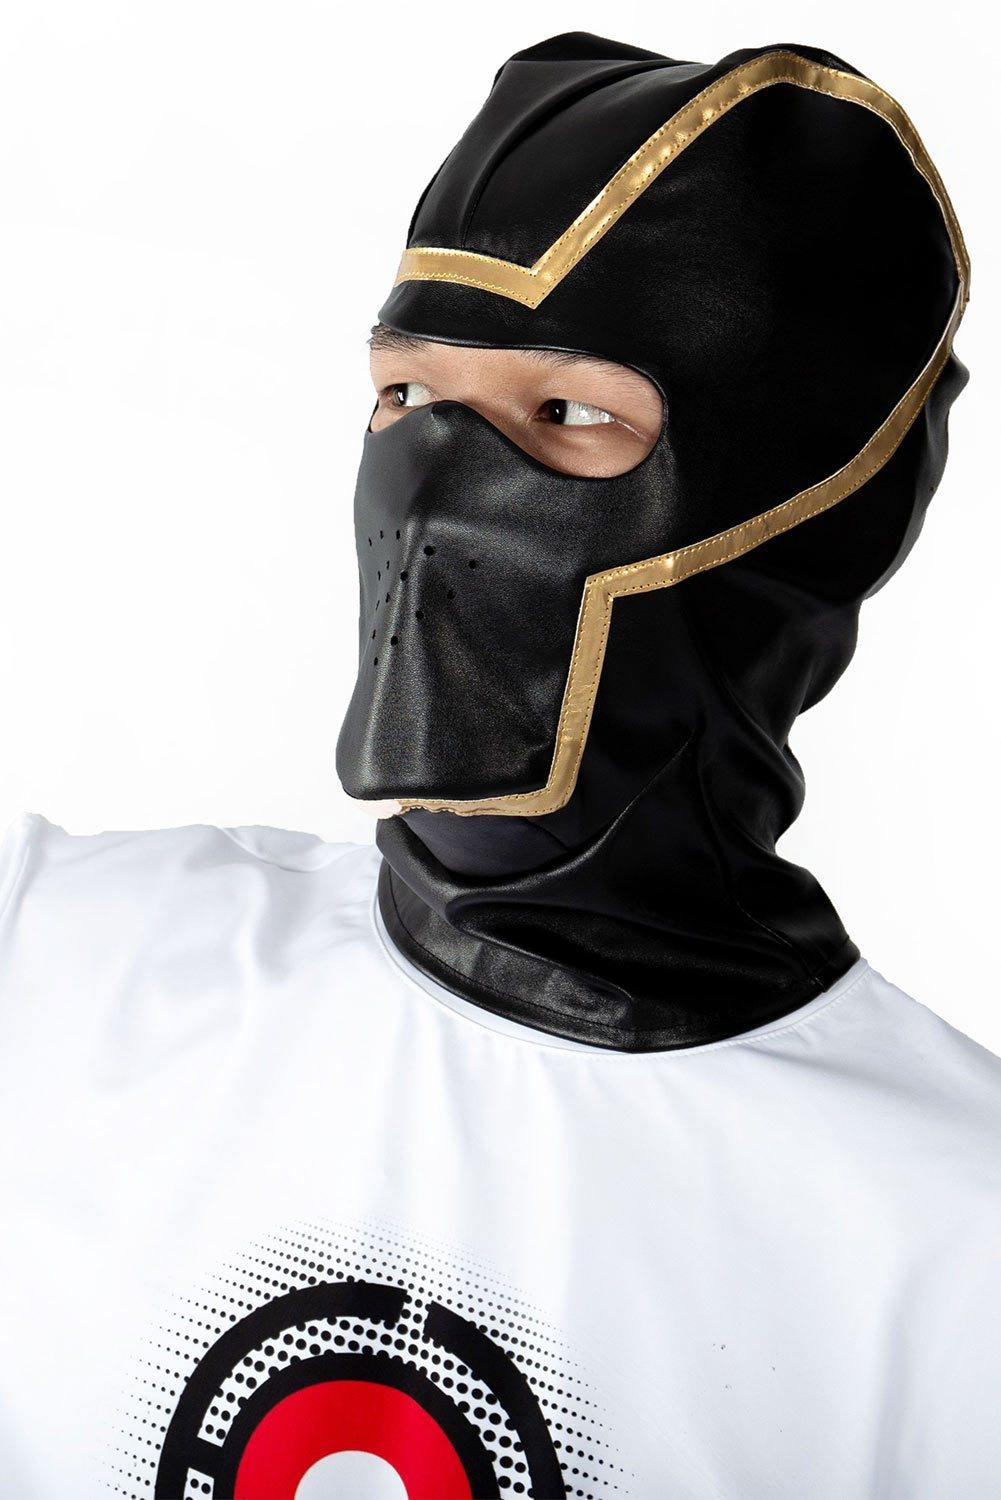 Avengers 4: Endgame Hawkeye Ronin Clint Barton Superheld Maske Cosplay Requisite Maske Kopfbedeckung - cosplaycartde